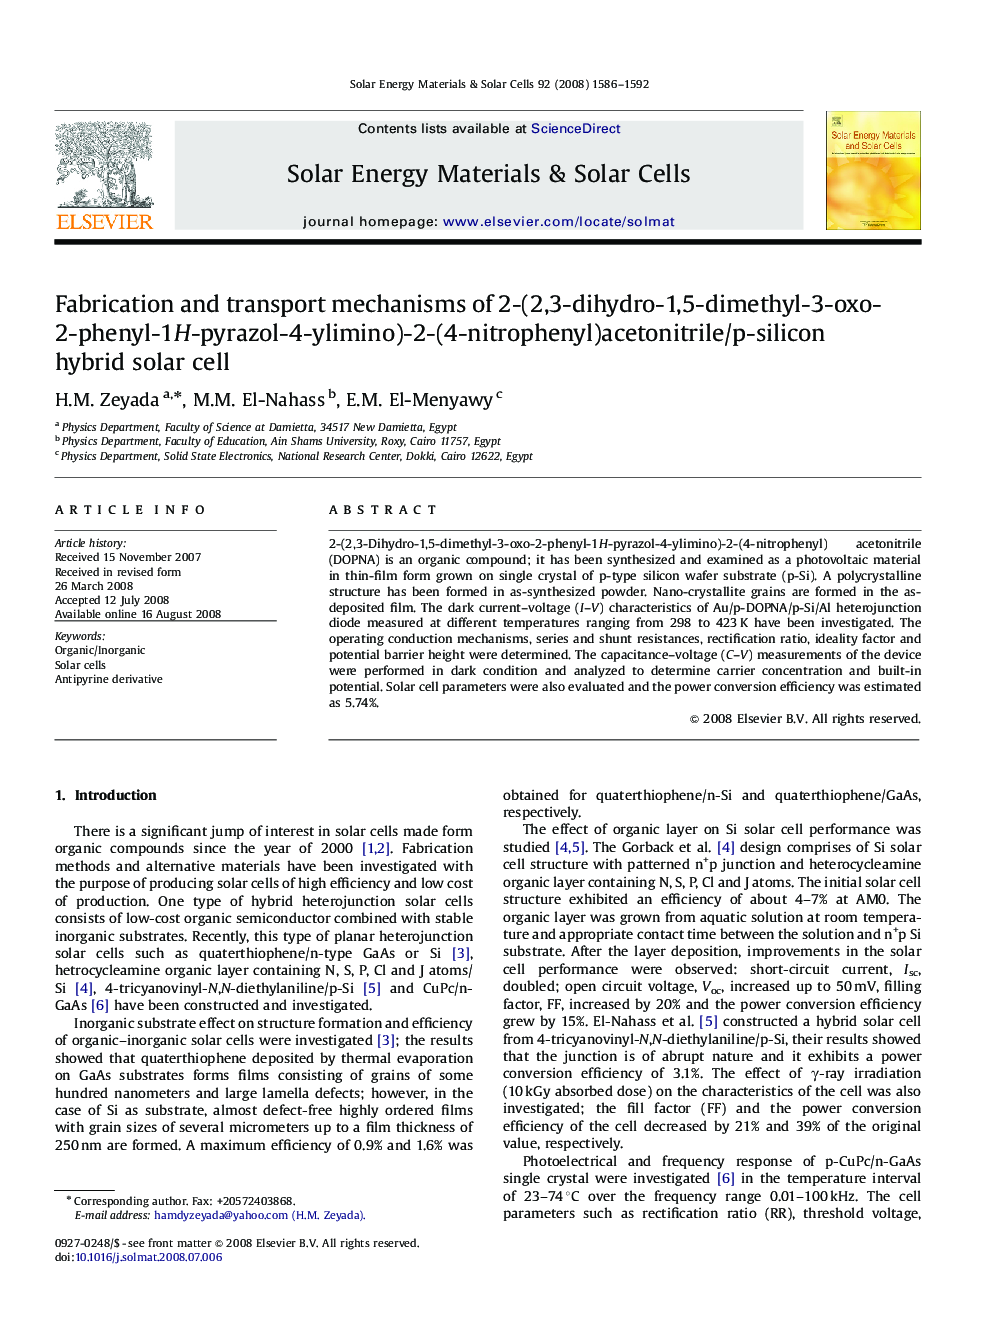 Fabrication and transport mechanisms of 2-(2,3-dihydro-1,5-dimethyl-3-oxo-2-phenyl-1H-pyrazol-4-ylimino)-2-(4-nitrophenyl)acetonitrile/p-silicon hybrid solar cell